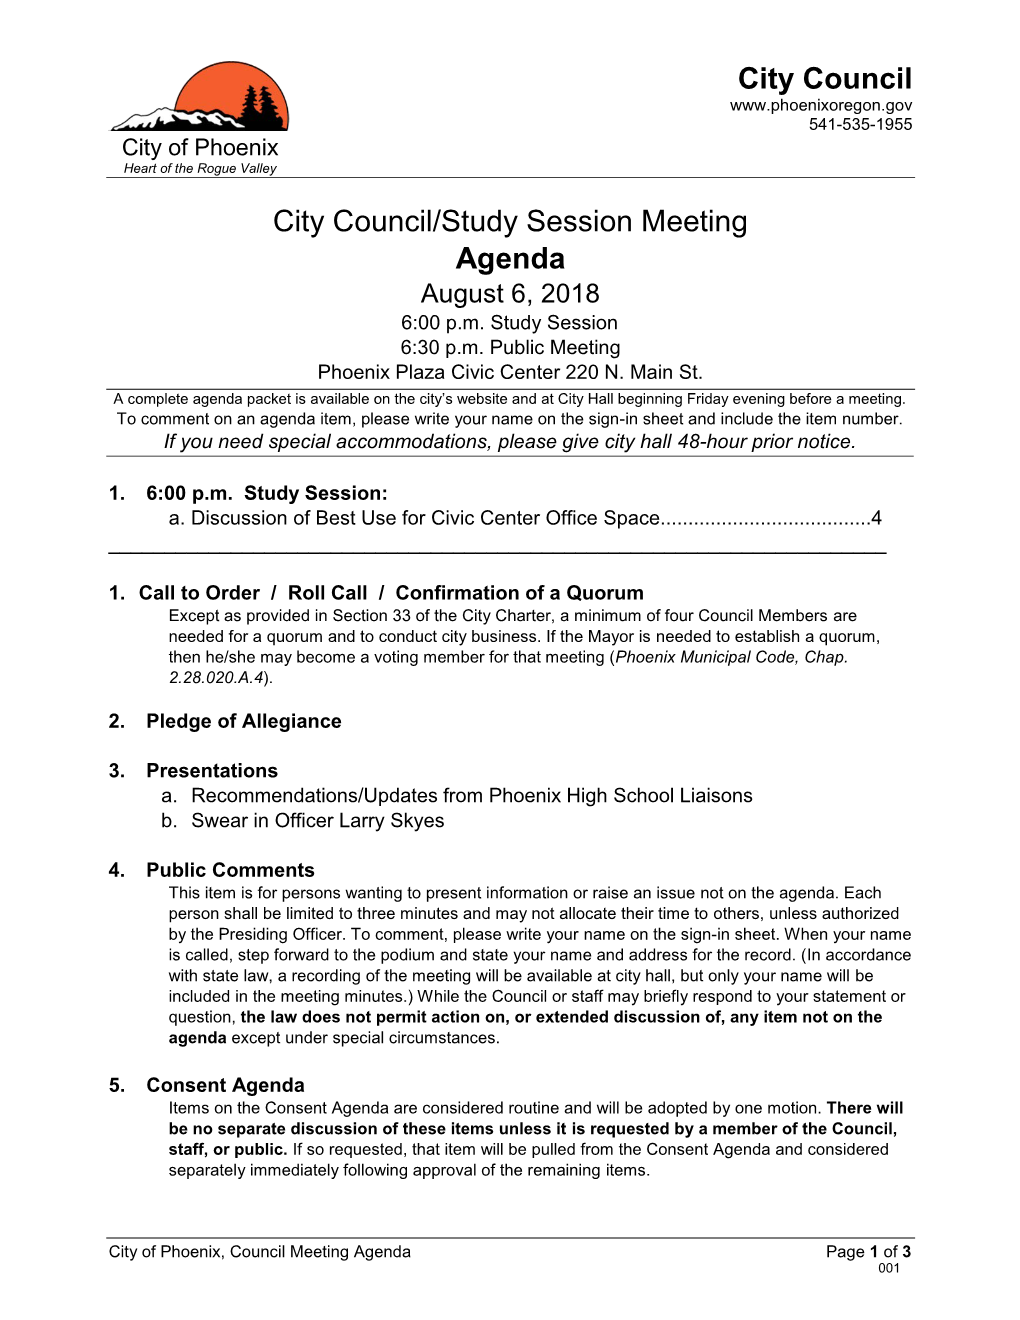 City Council City Council/Study Session Meeting Agenda